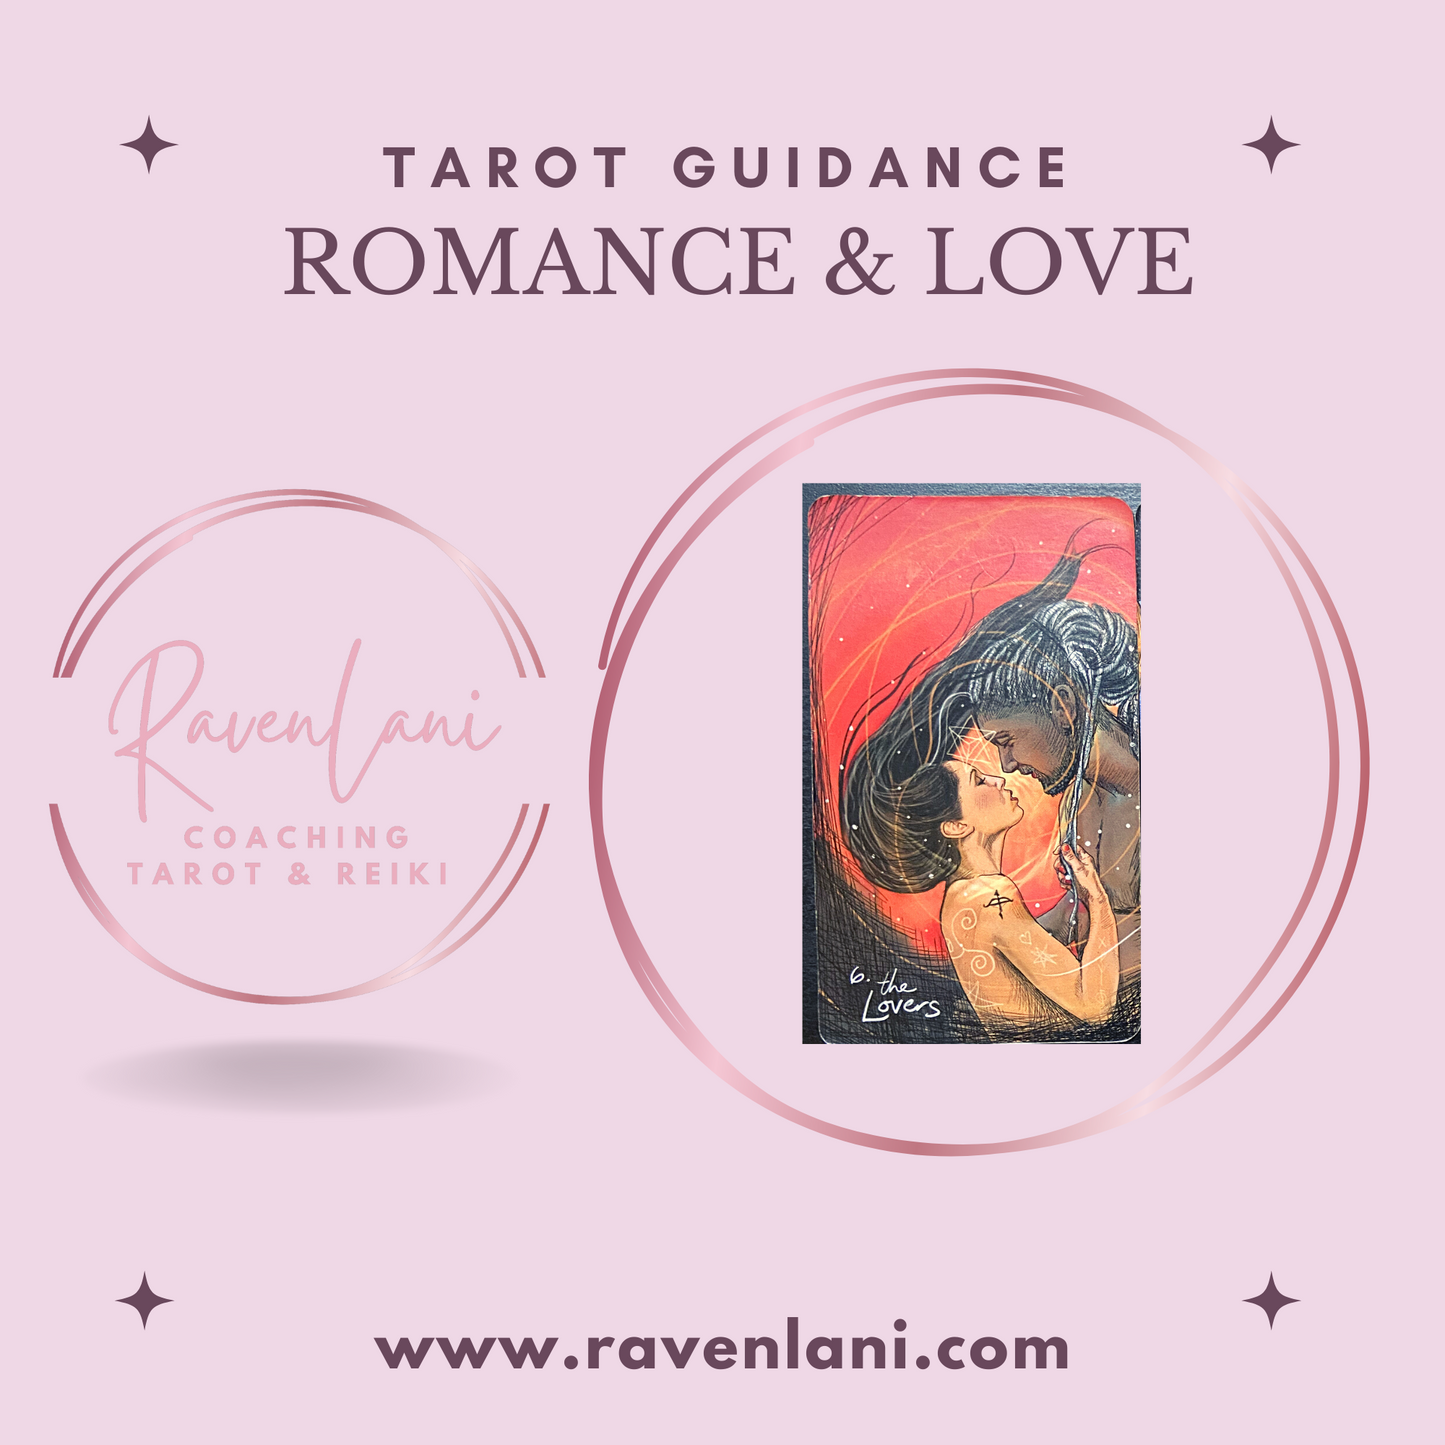 Romance & Love Guidance